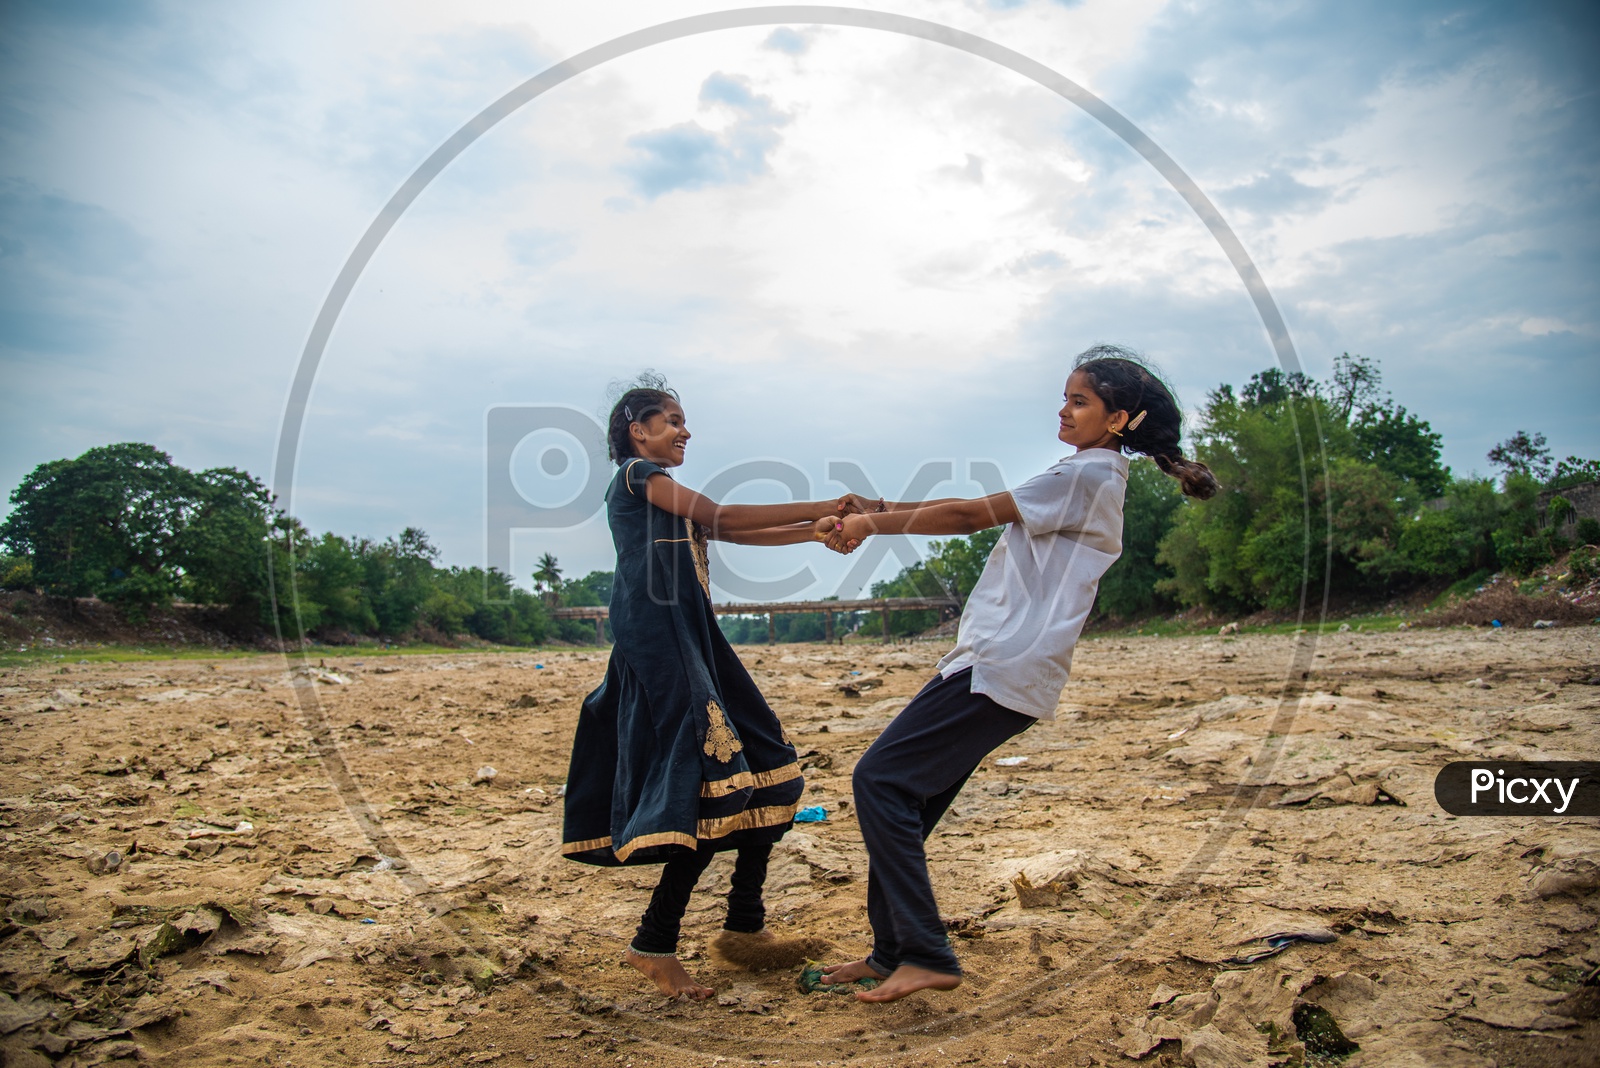 Kids Playing in a dried up Madras Canal near Revendrapadu, Guntur District